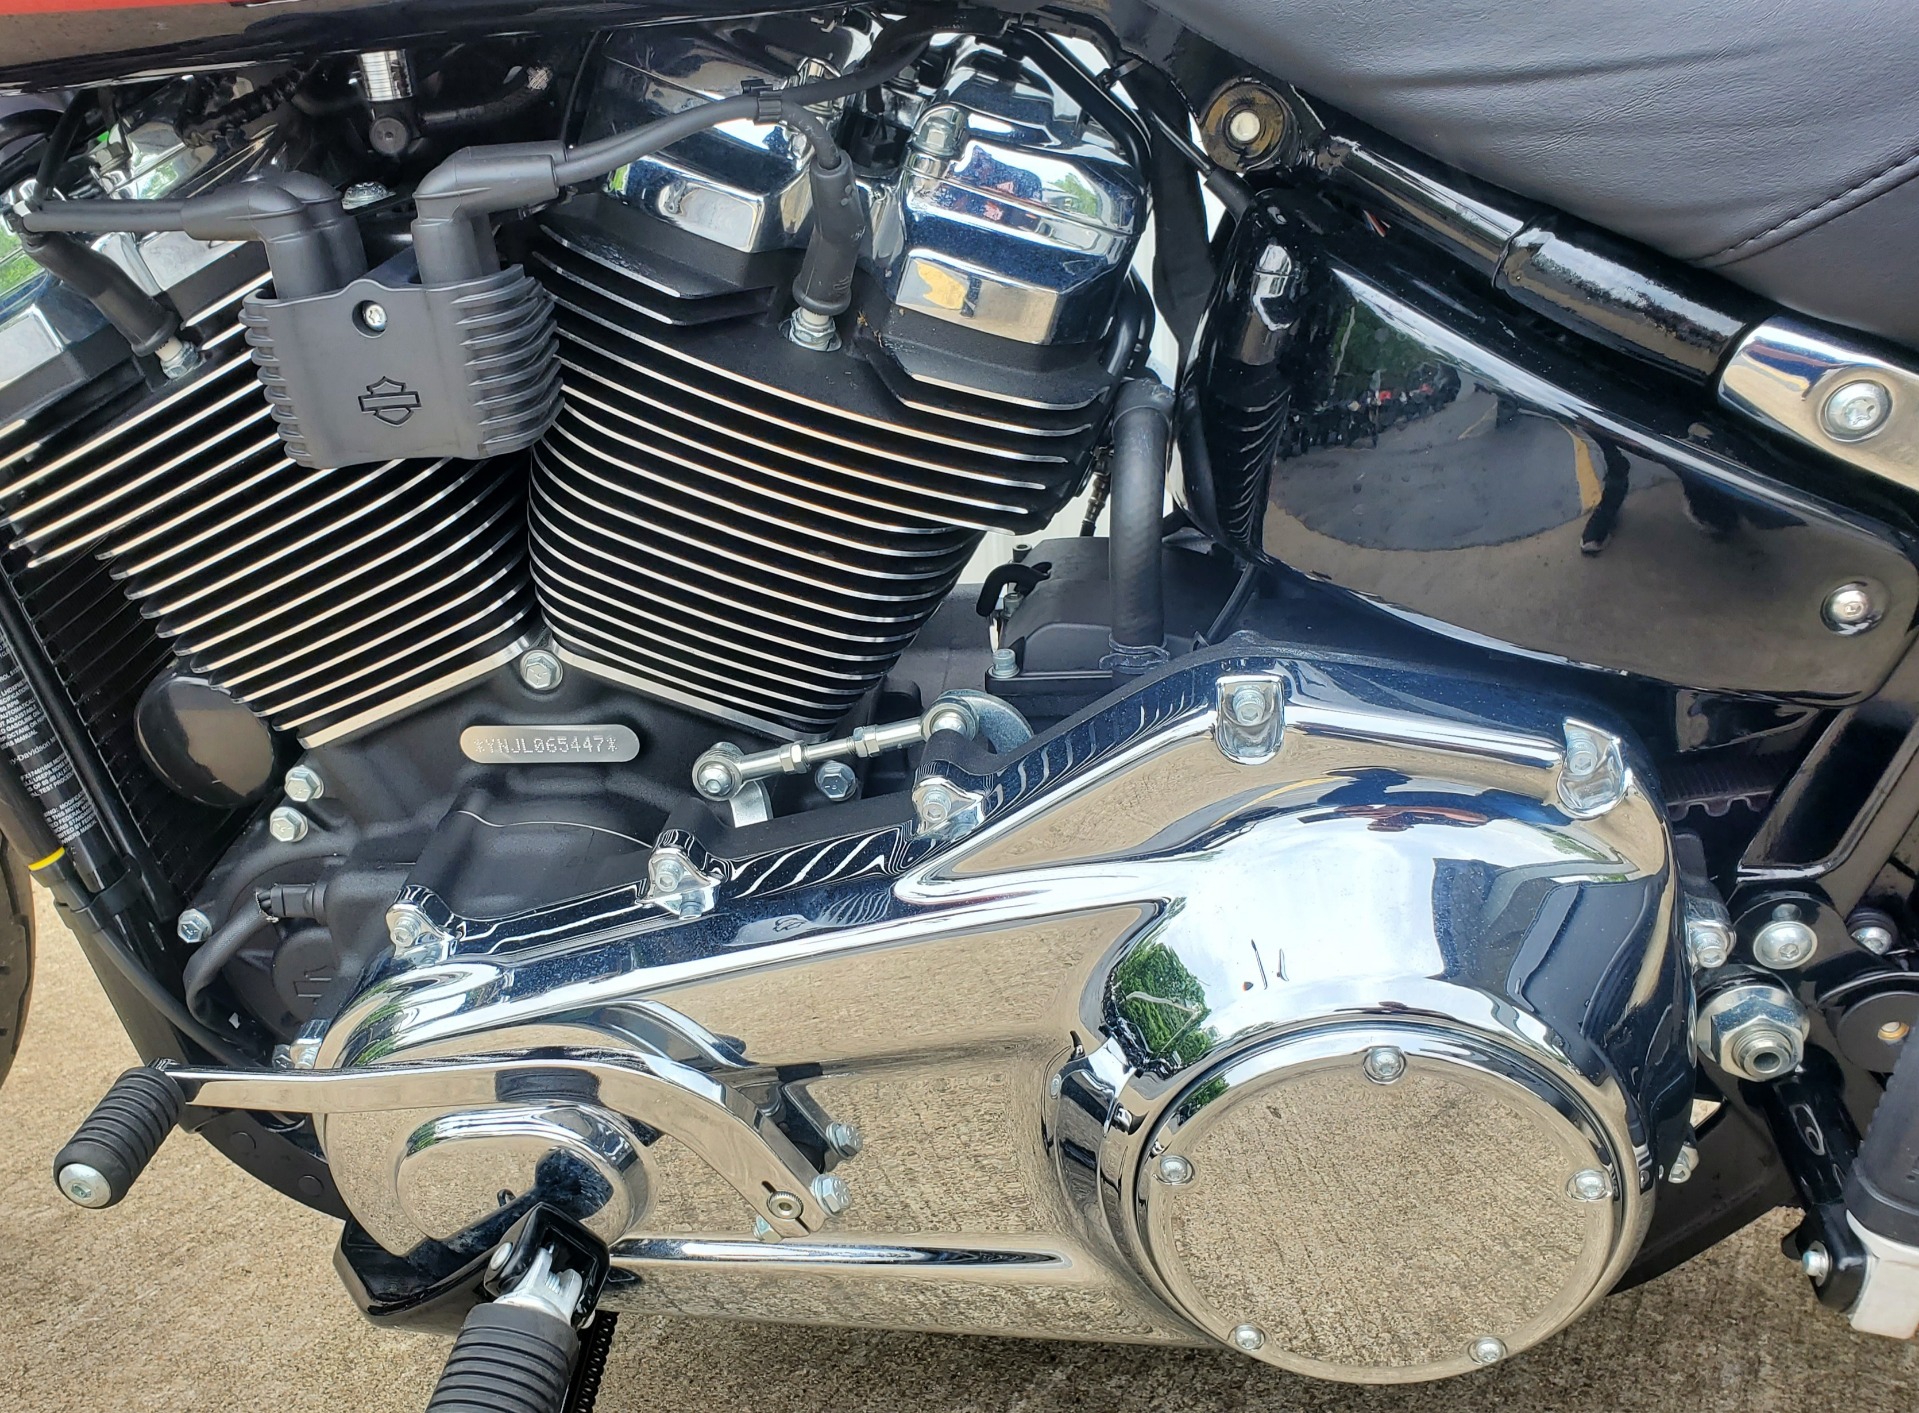 2020 Harley-Davidson Low Rider® in Athens, Ohio - Photo 8